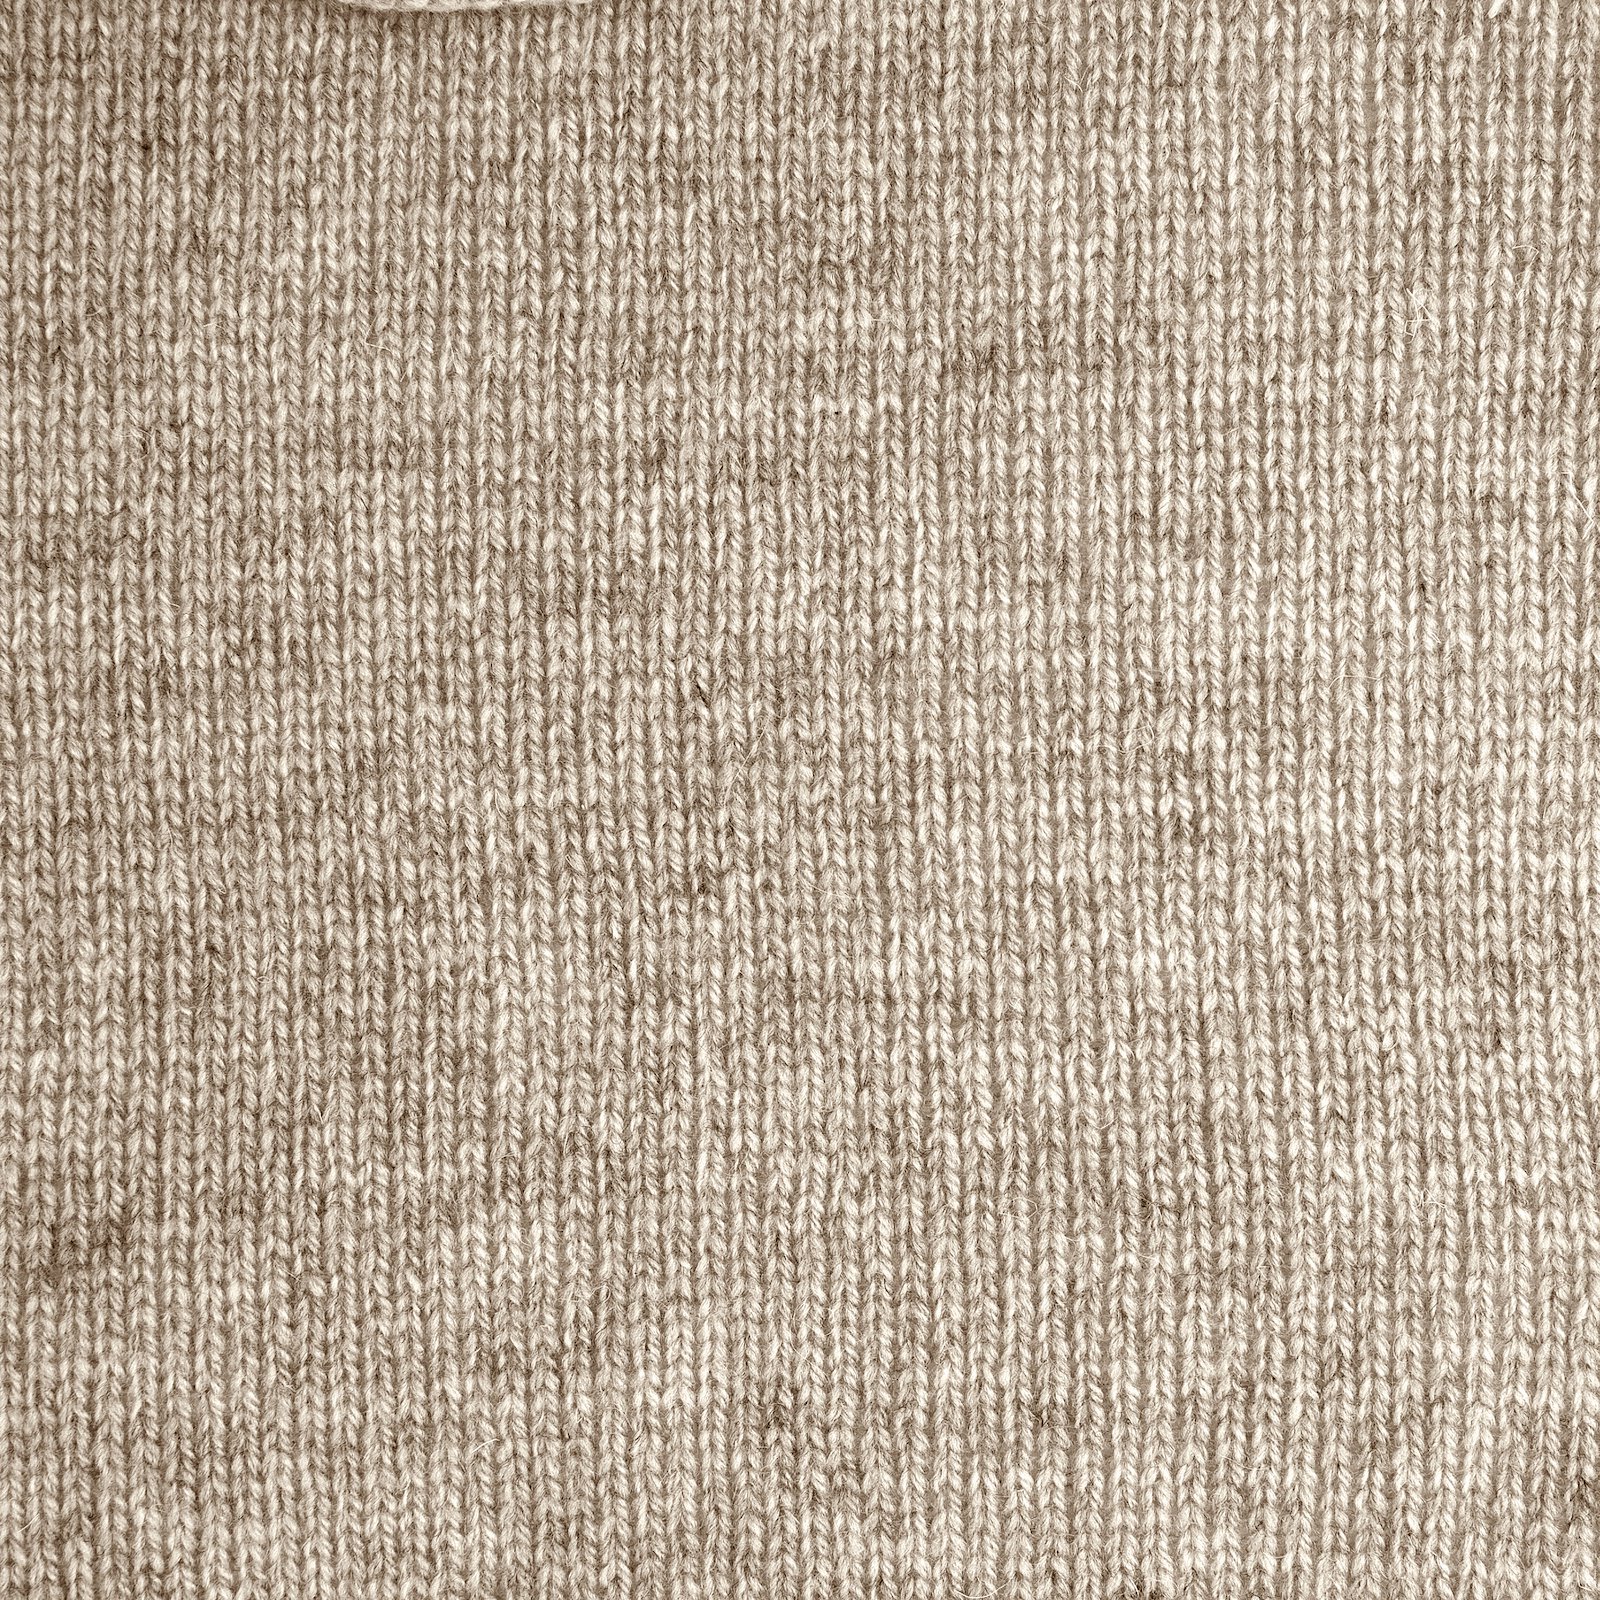 FRAYA, 100% wool yarn "Mindful", sand melange 90053338_sskit